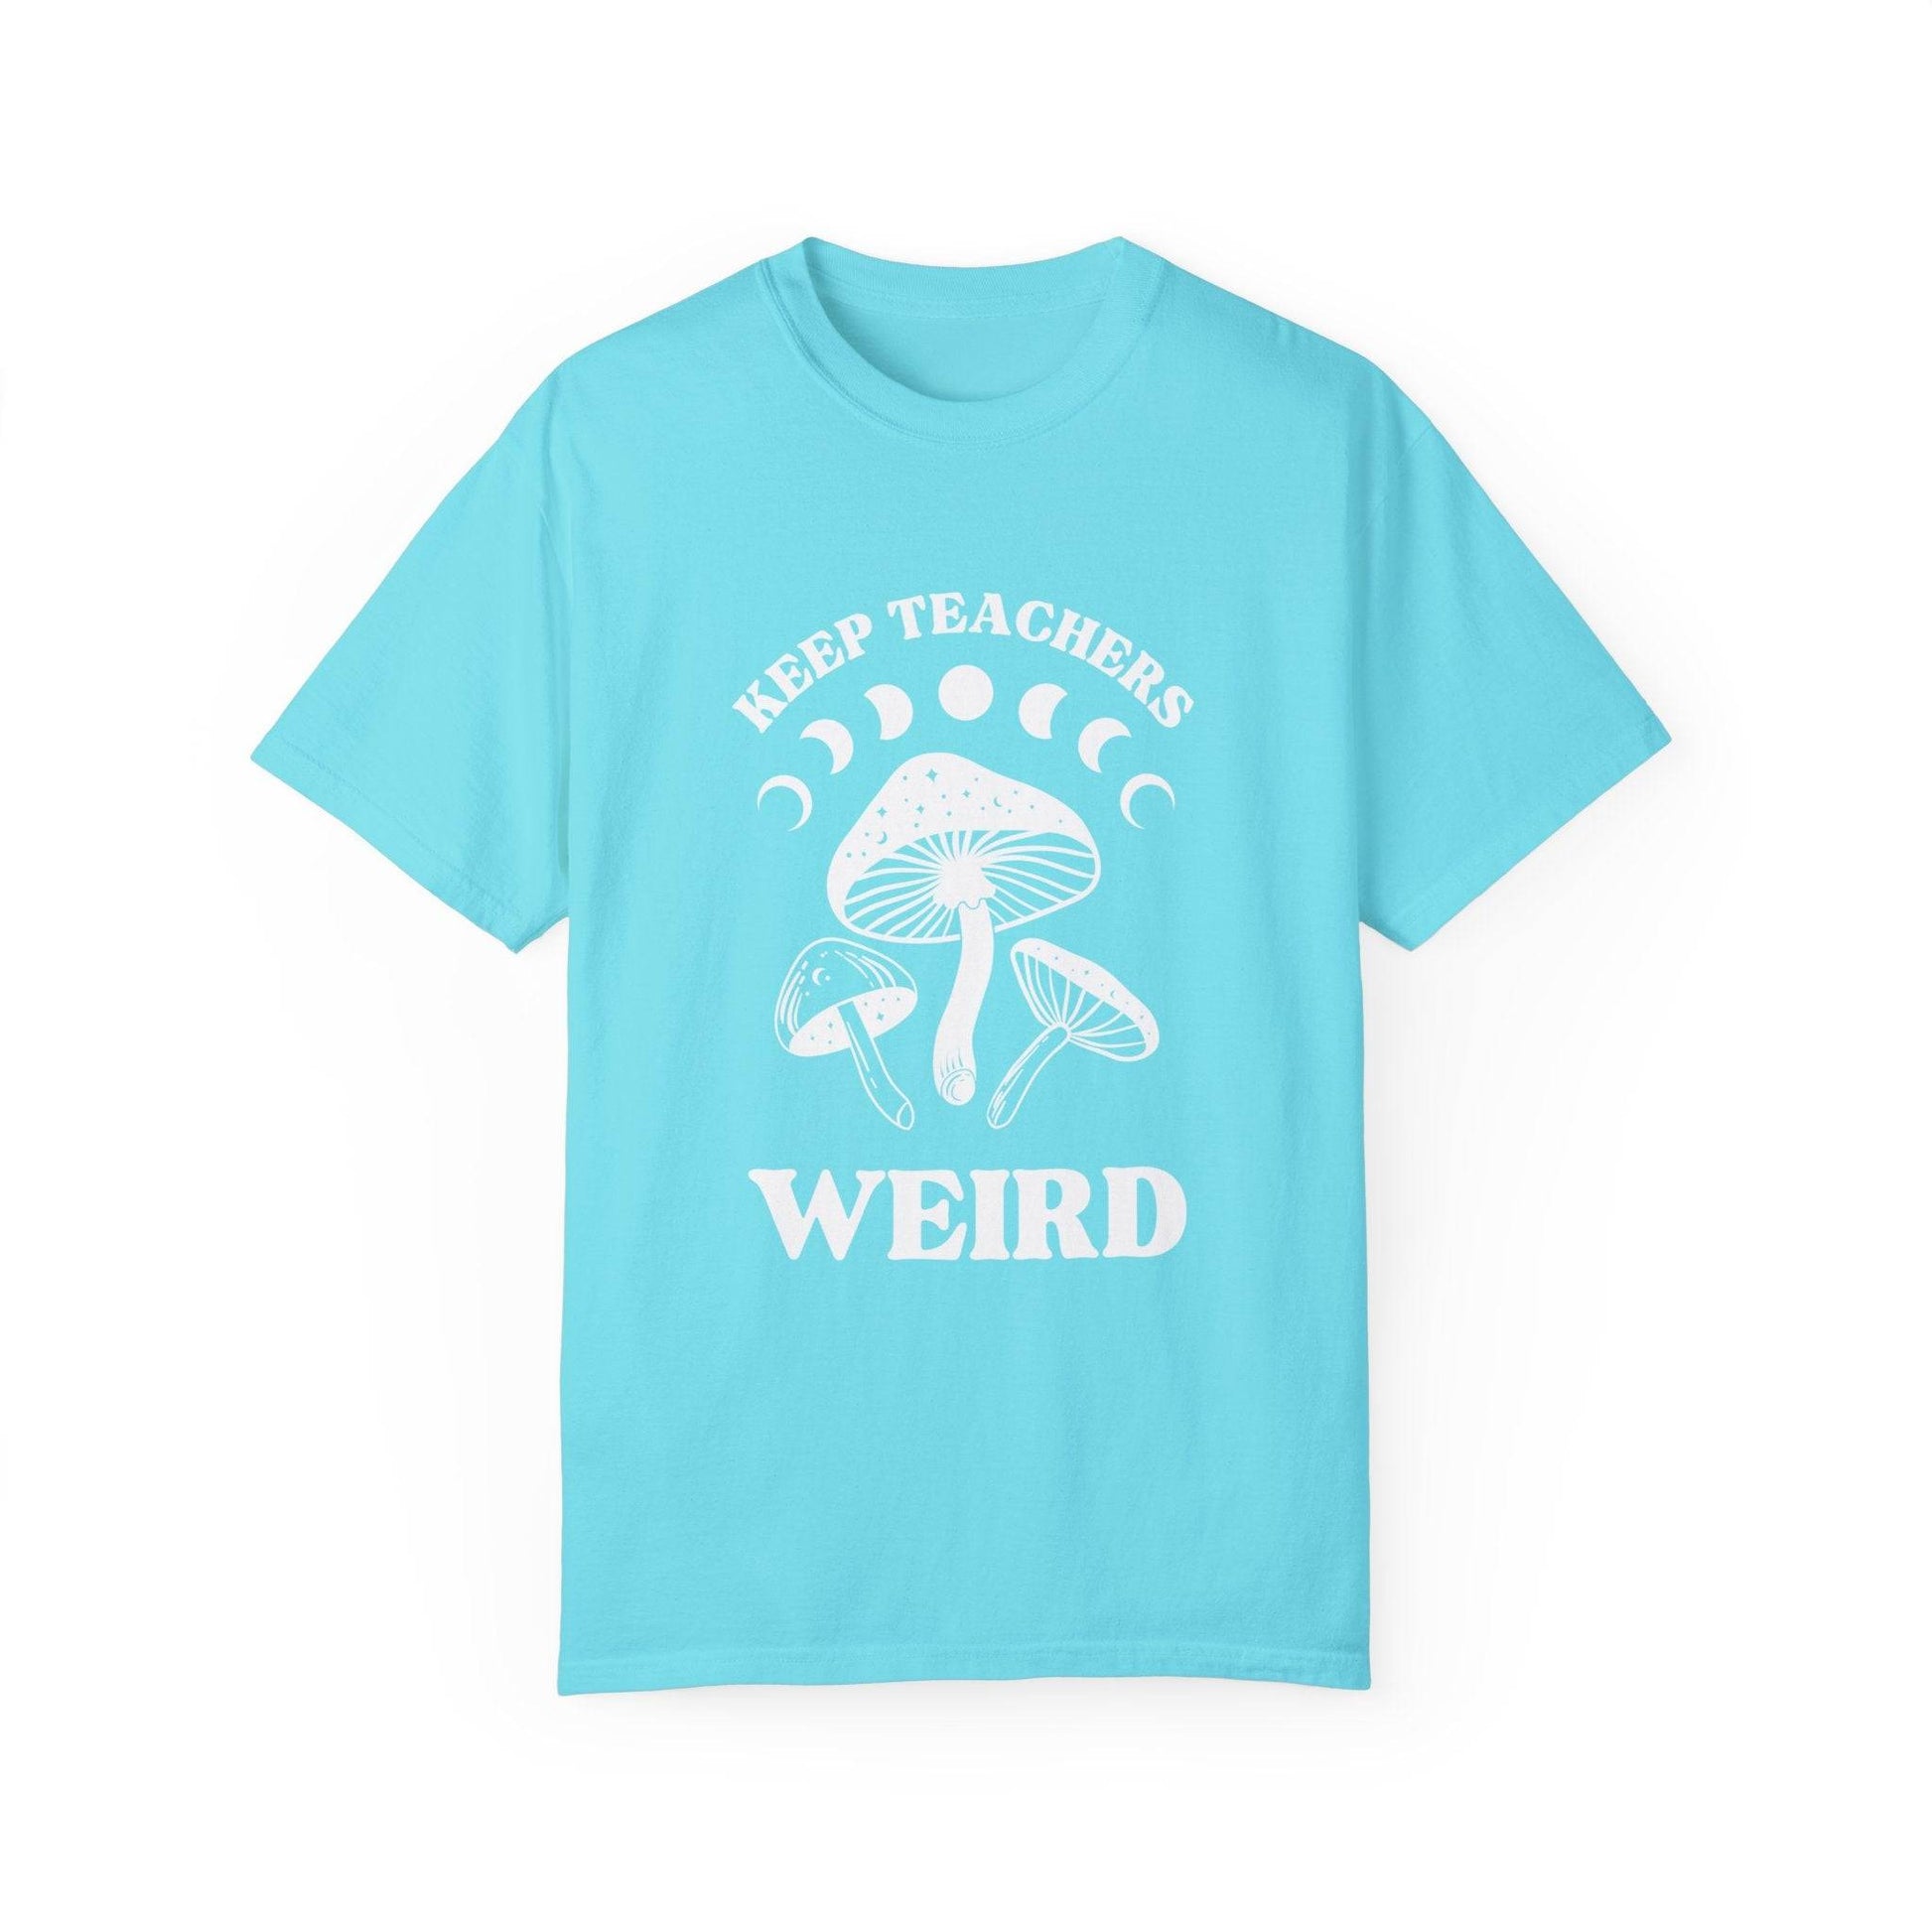 Keep Teachers Weird T- shirt with Mushrooms Moon and Stars